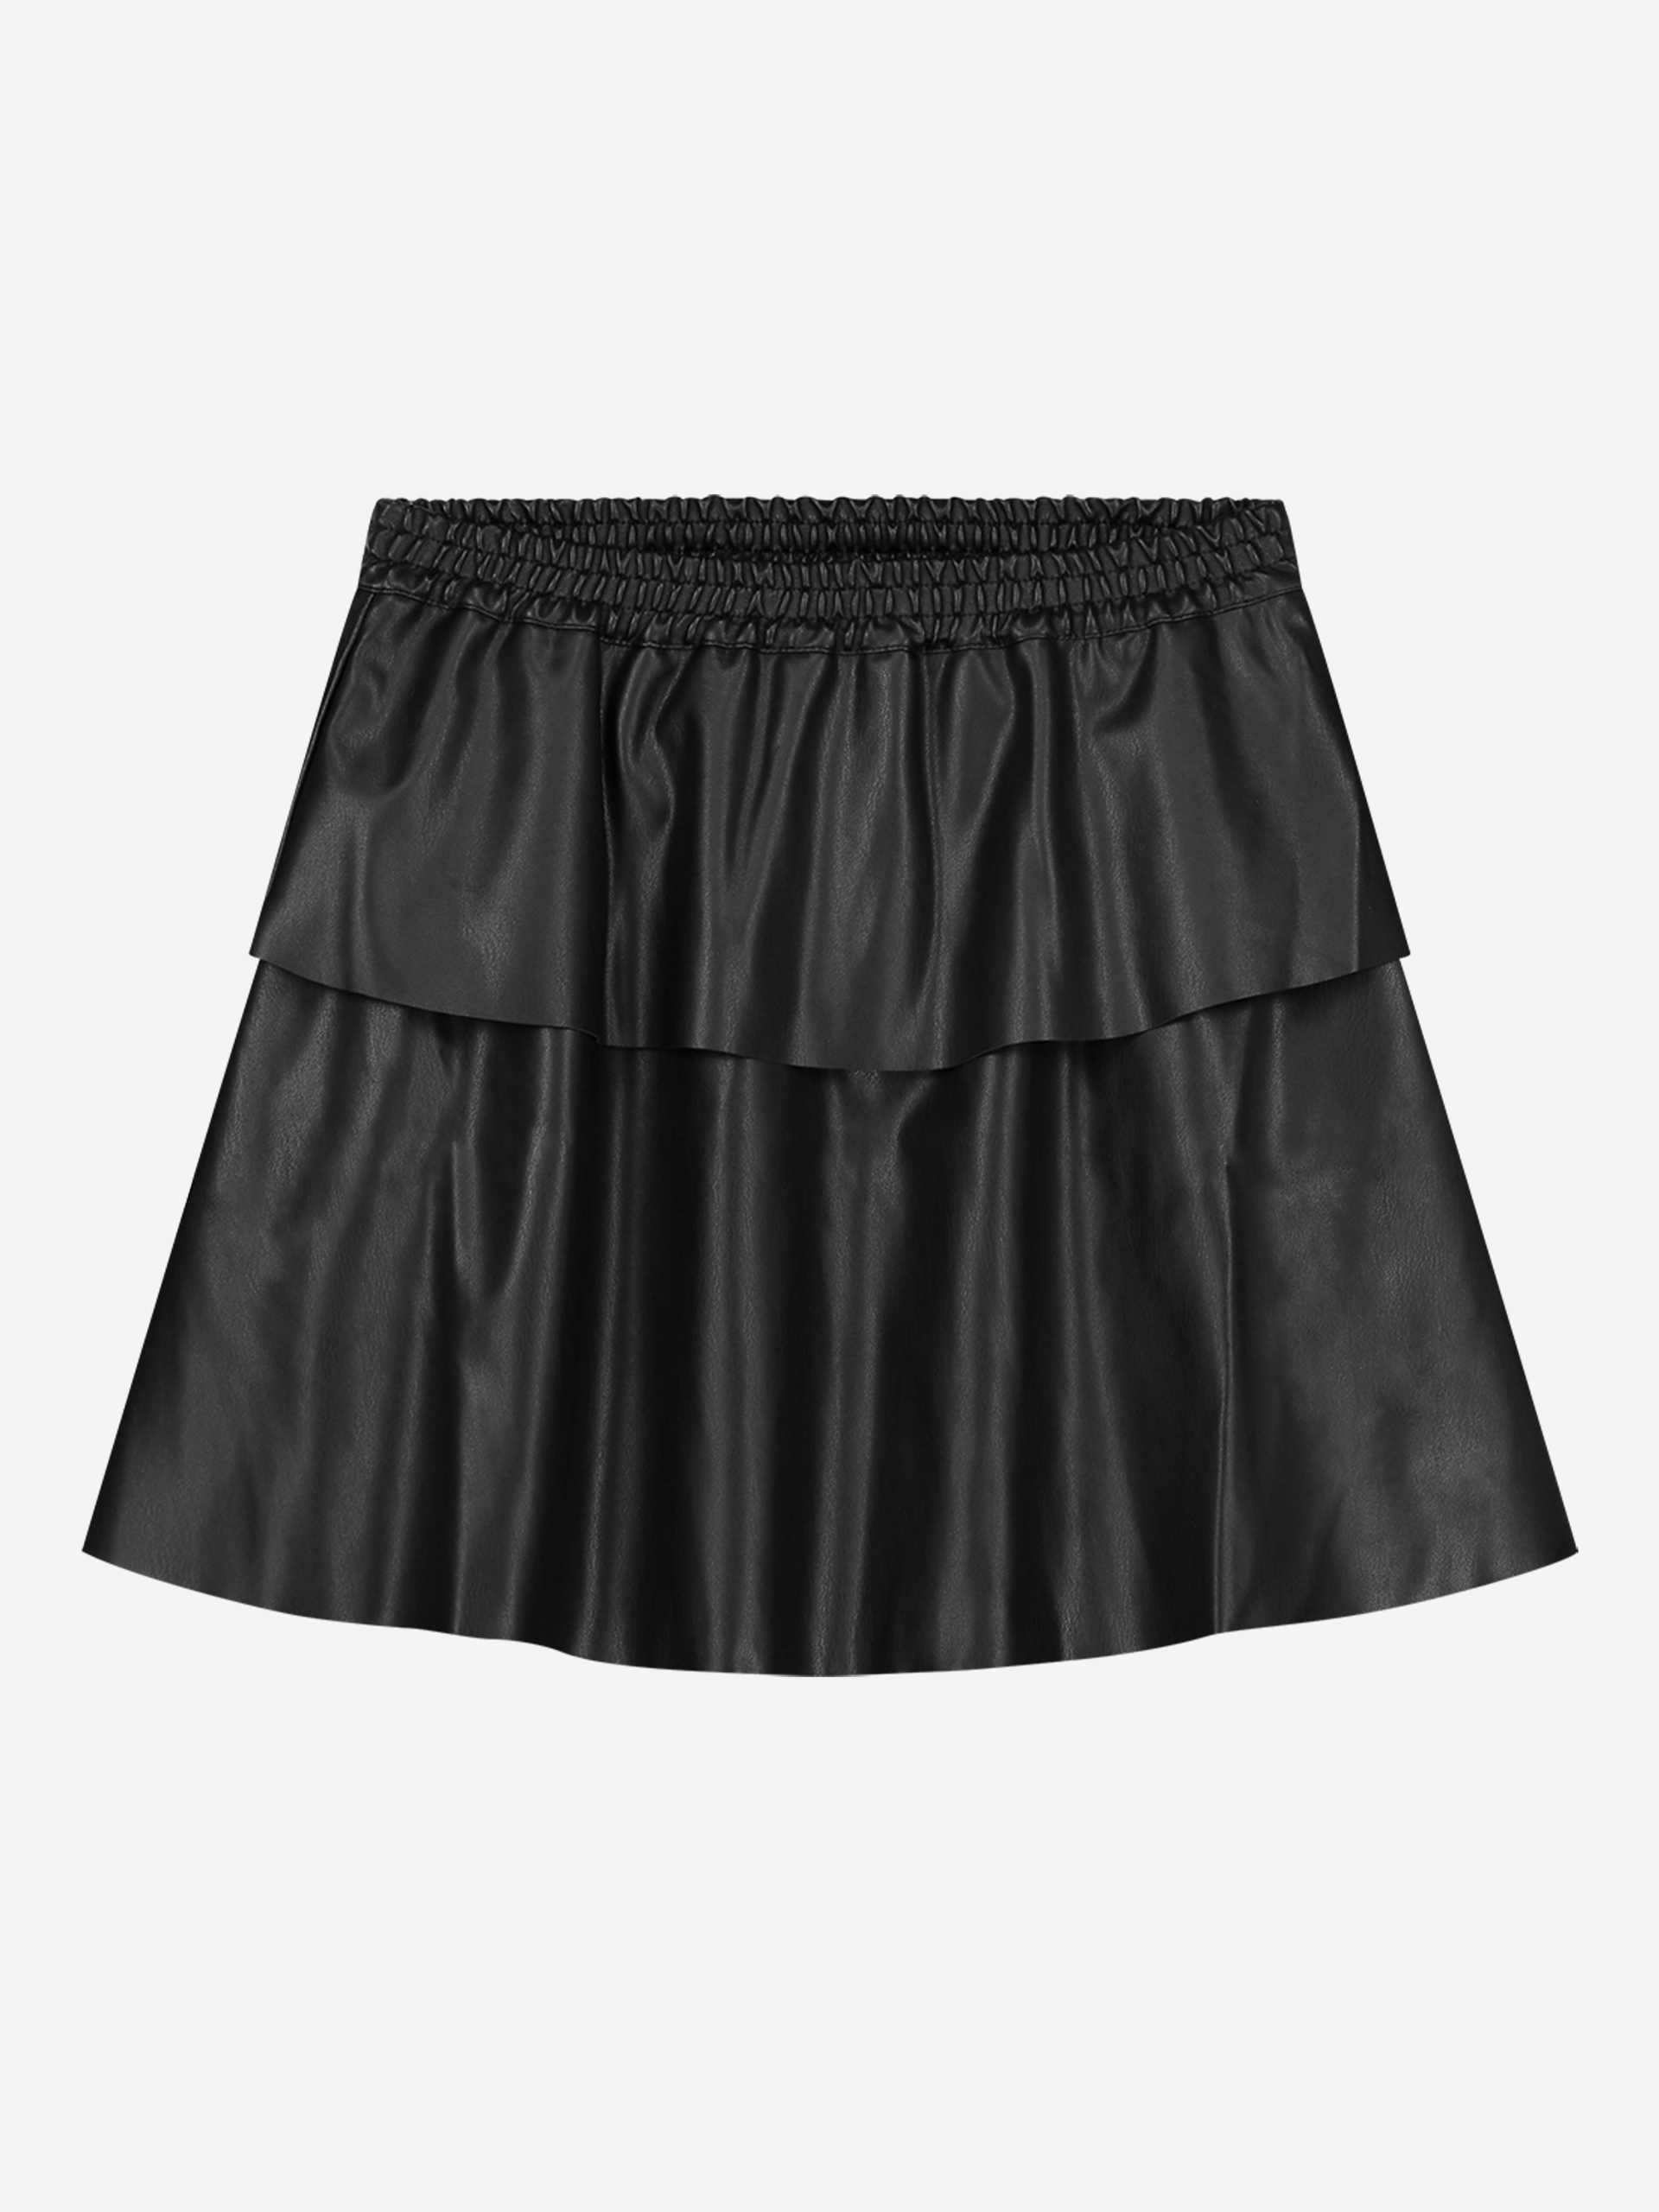  A-line skirt with smock 